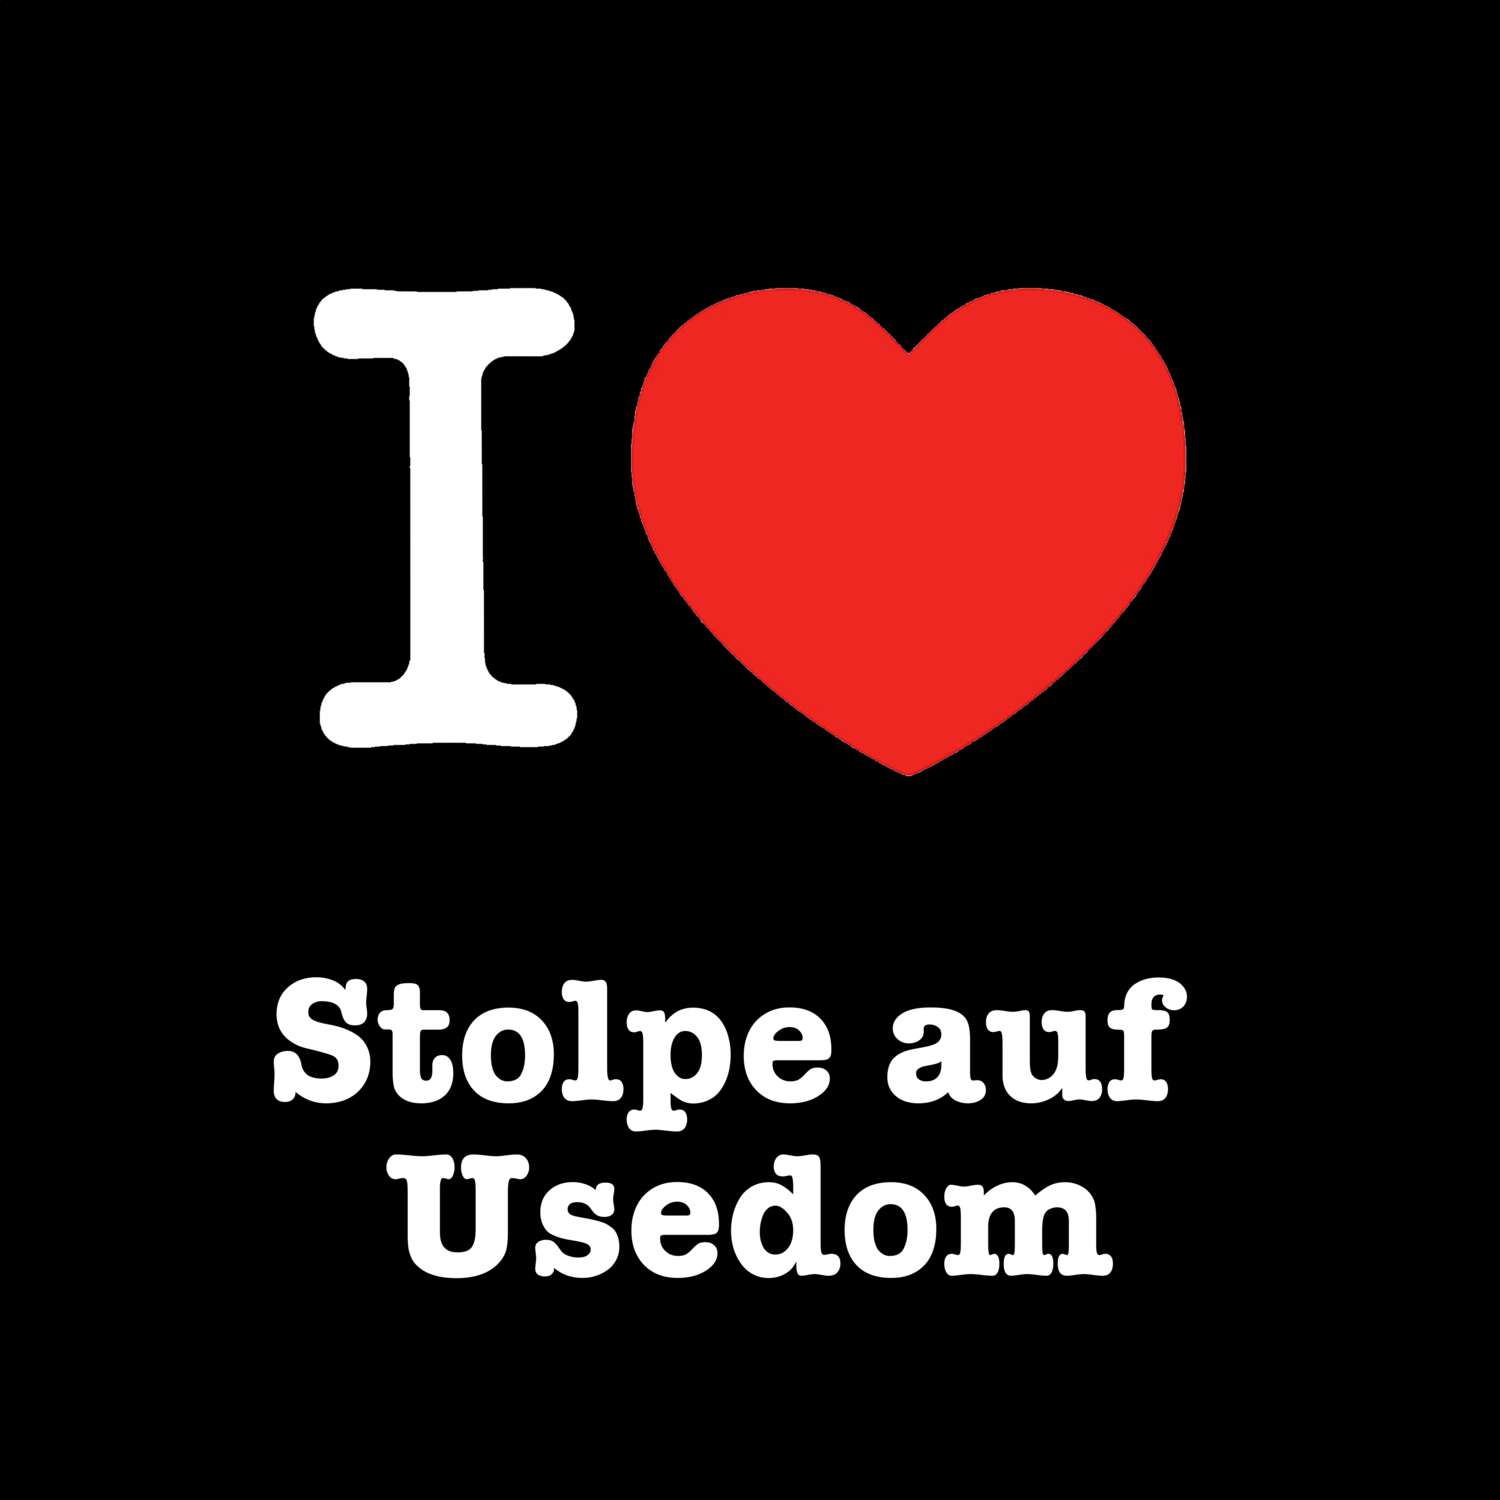 Stolpe auf Usedom T-Shirt »I love«